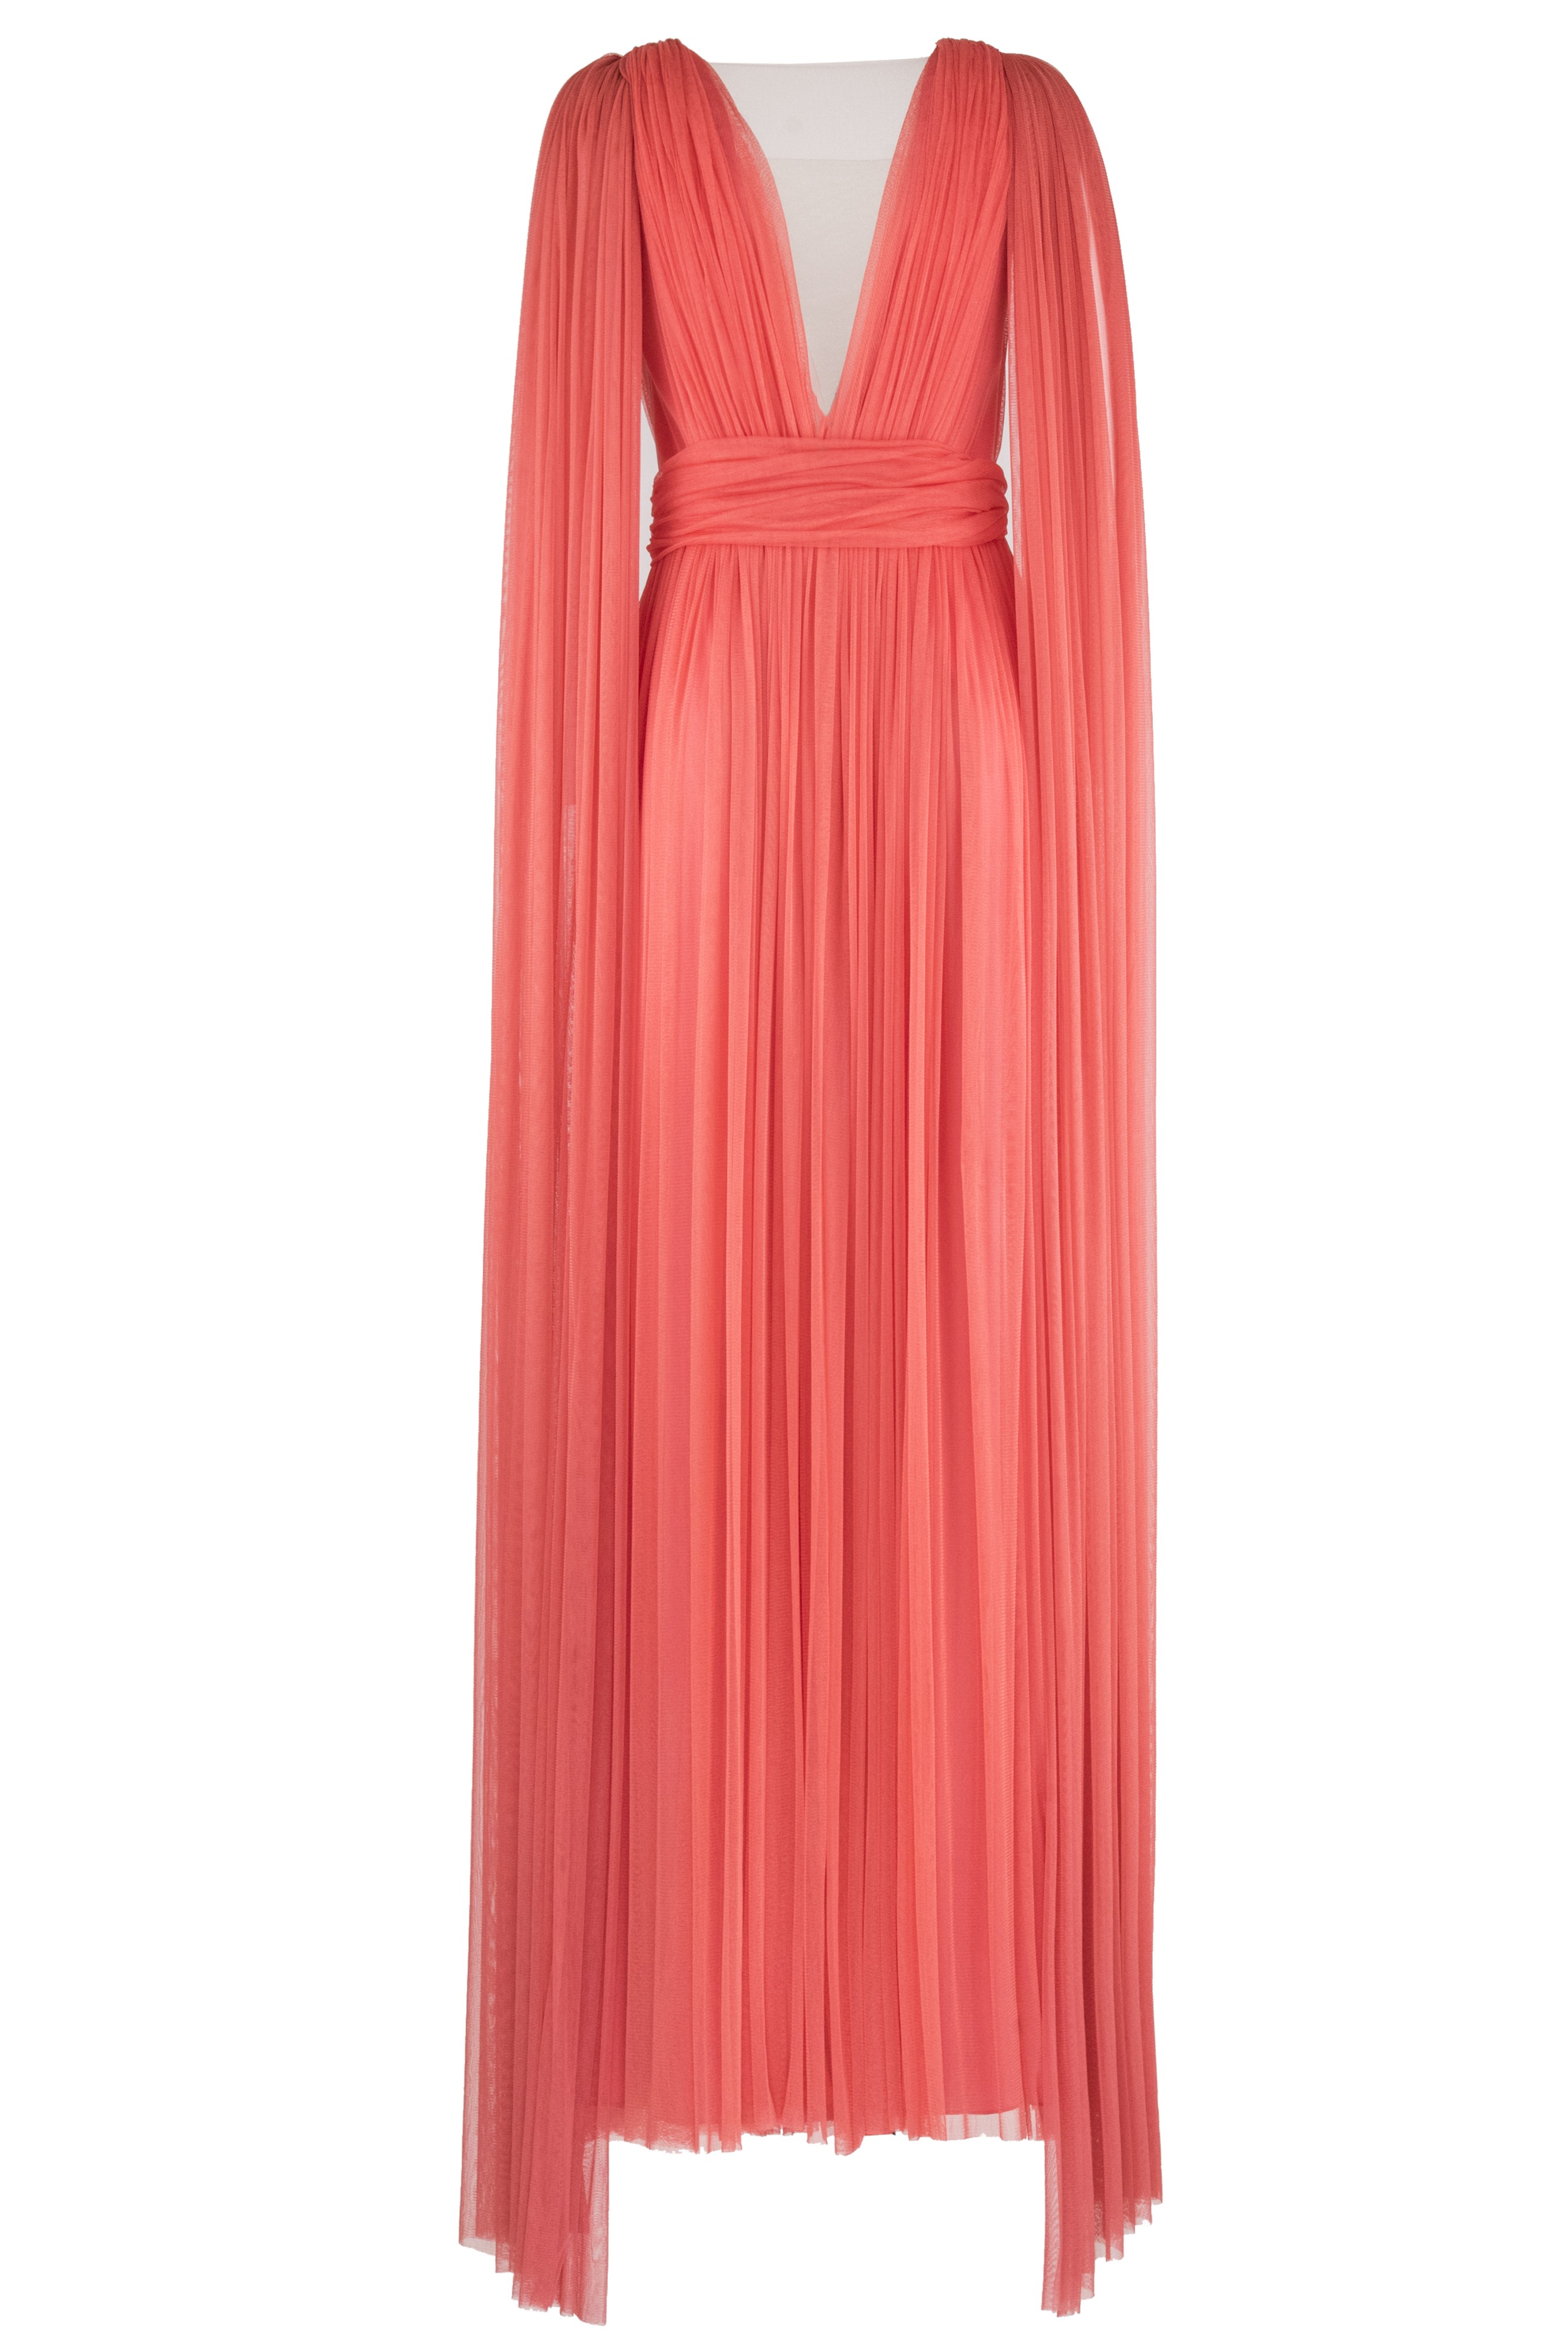 Rhea Costa Dress 20210D LG SMP - New Season Spring Summer 2020